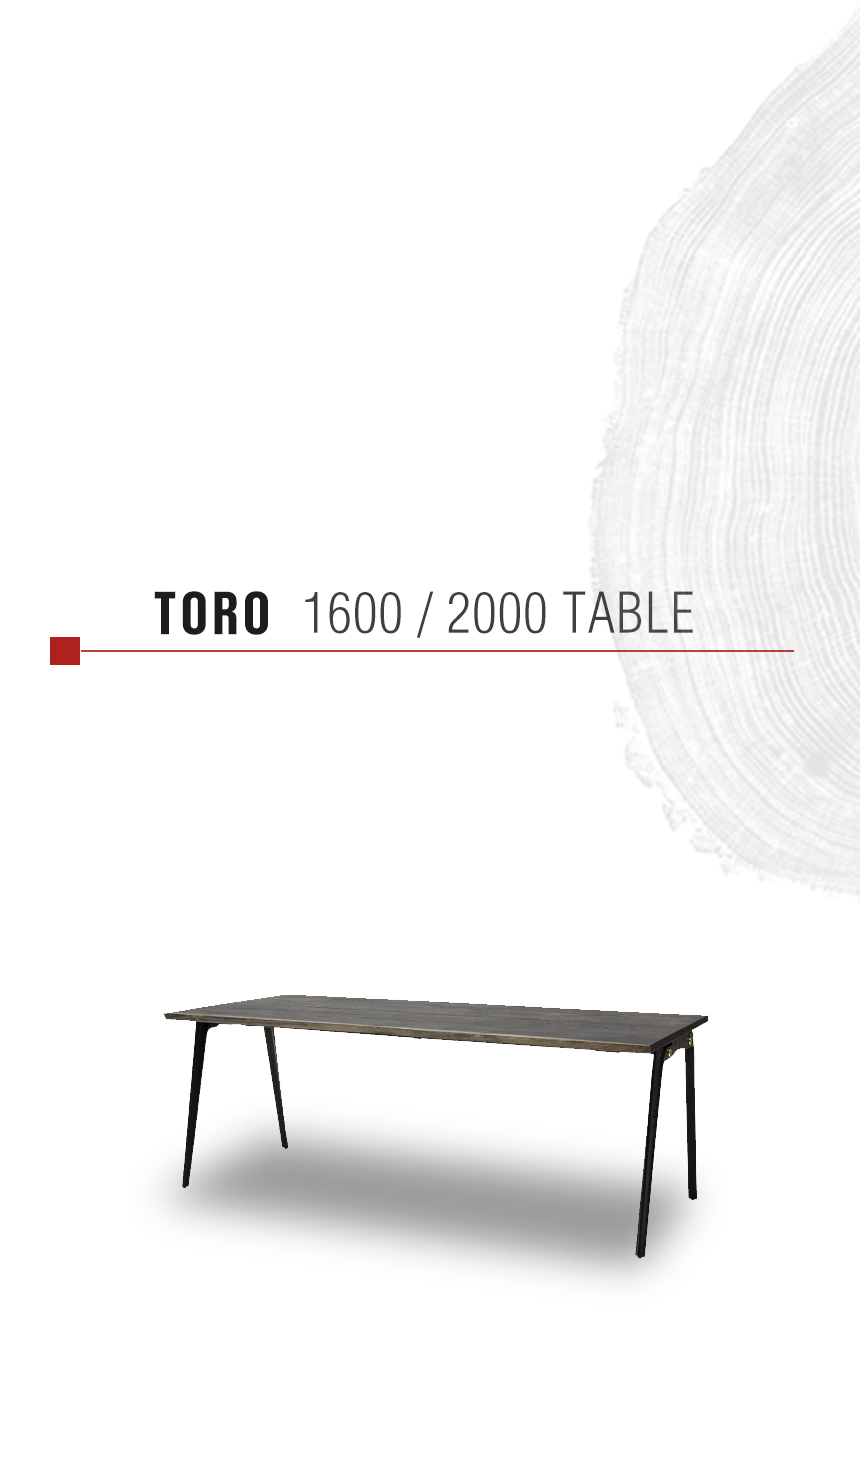 toro_1600,2000 table-3.jpg